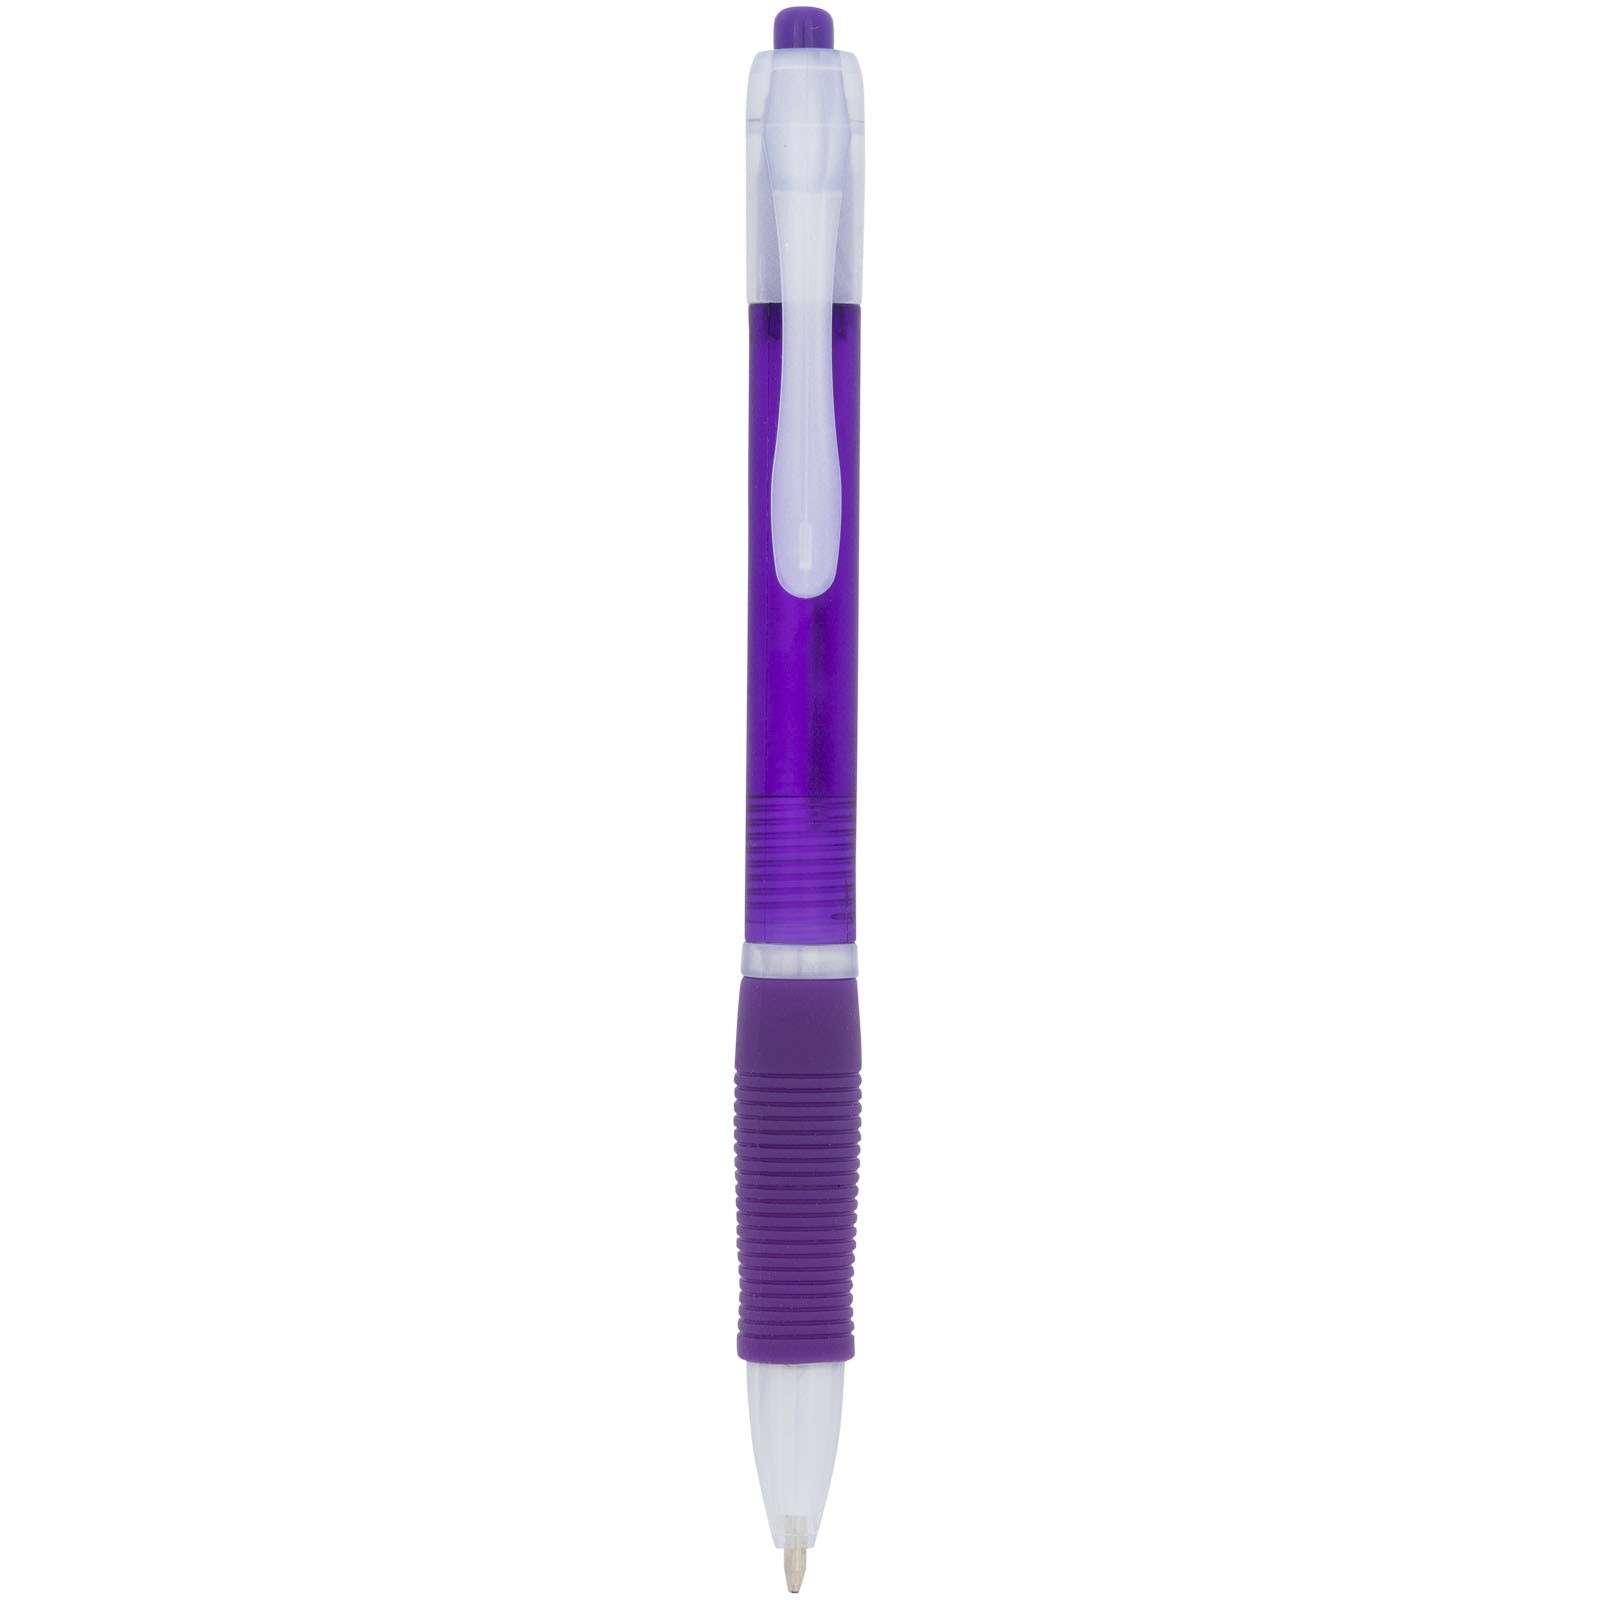 Trim ballpoint pen - Purple